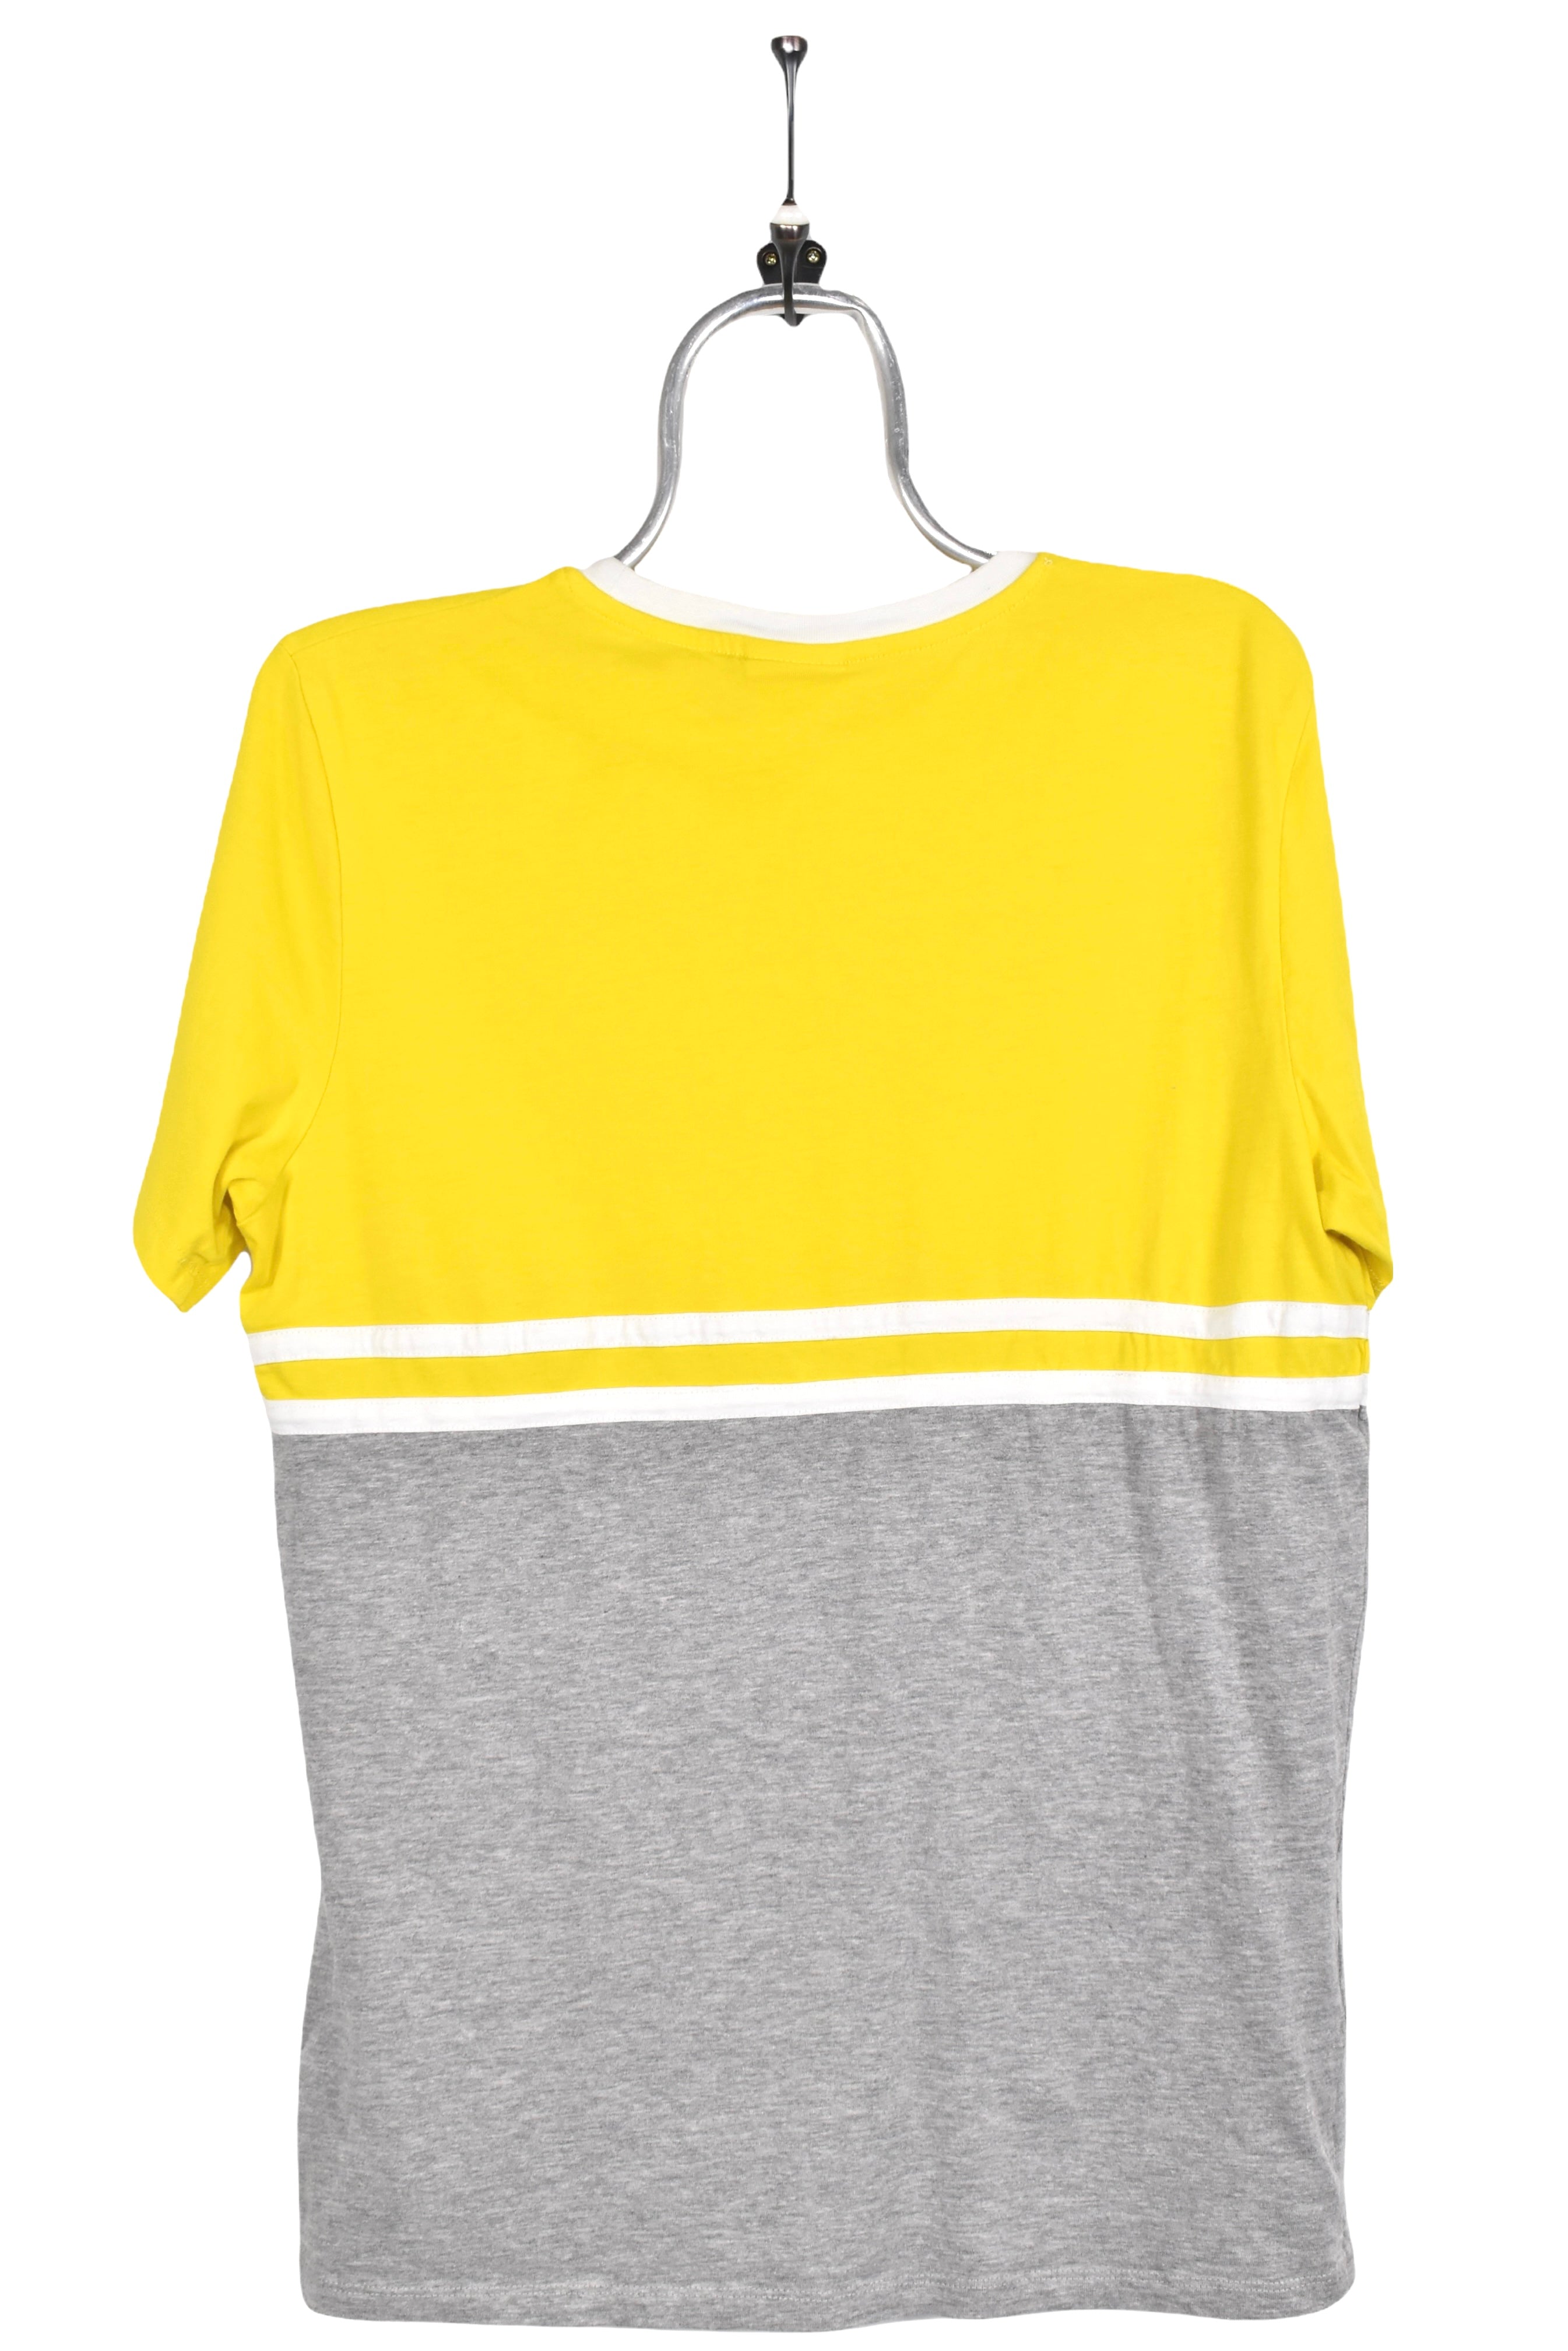 Women's vintage Umbro shirt, yellow graphic tee - AU M NIKE